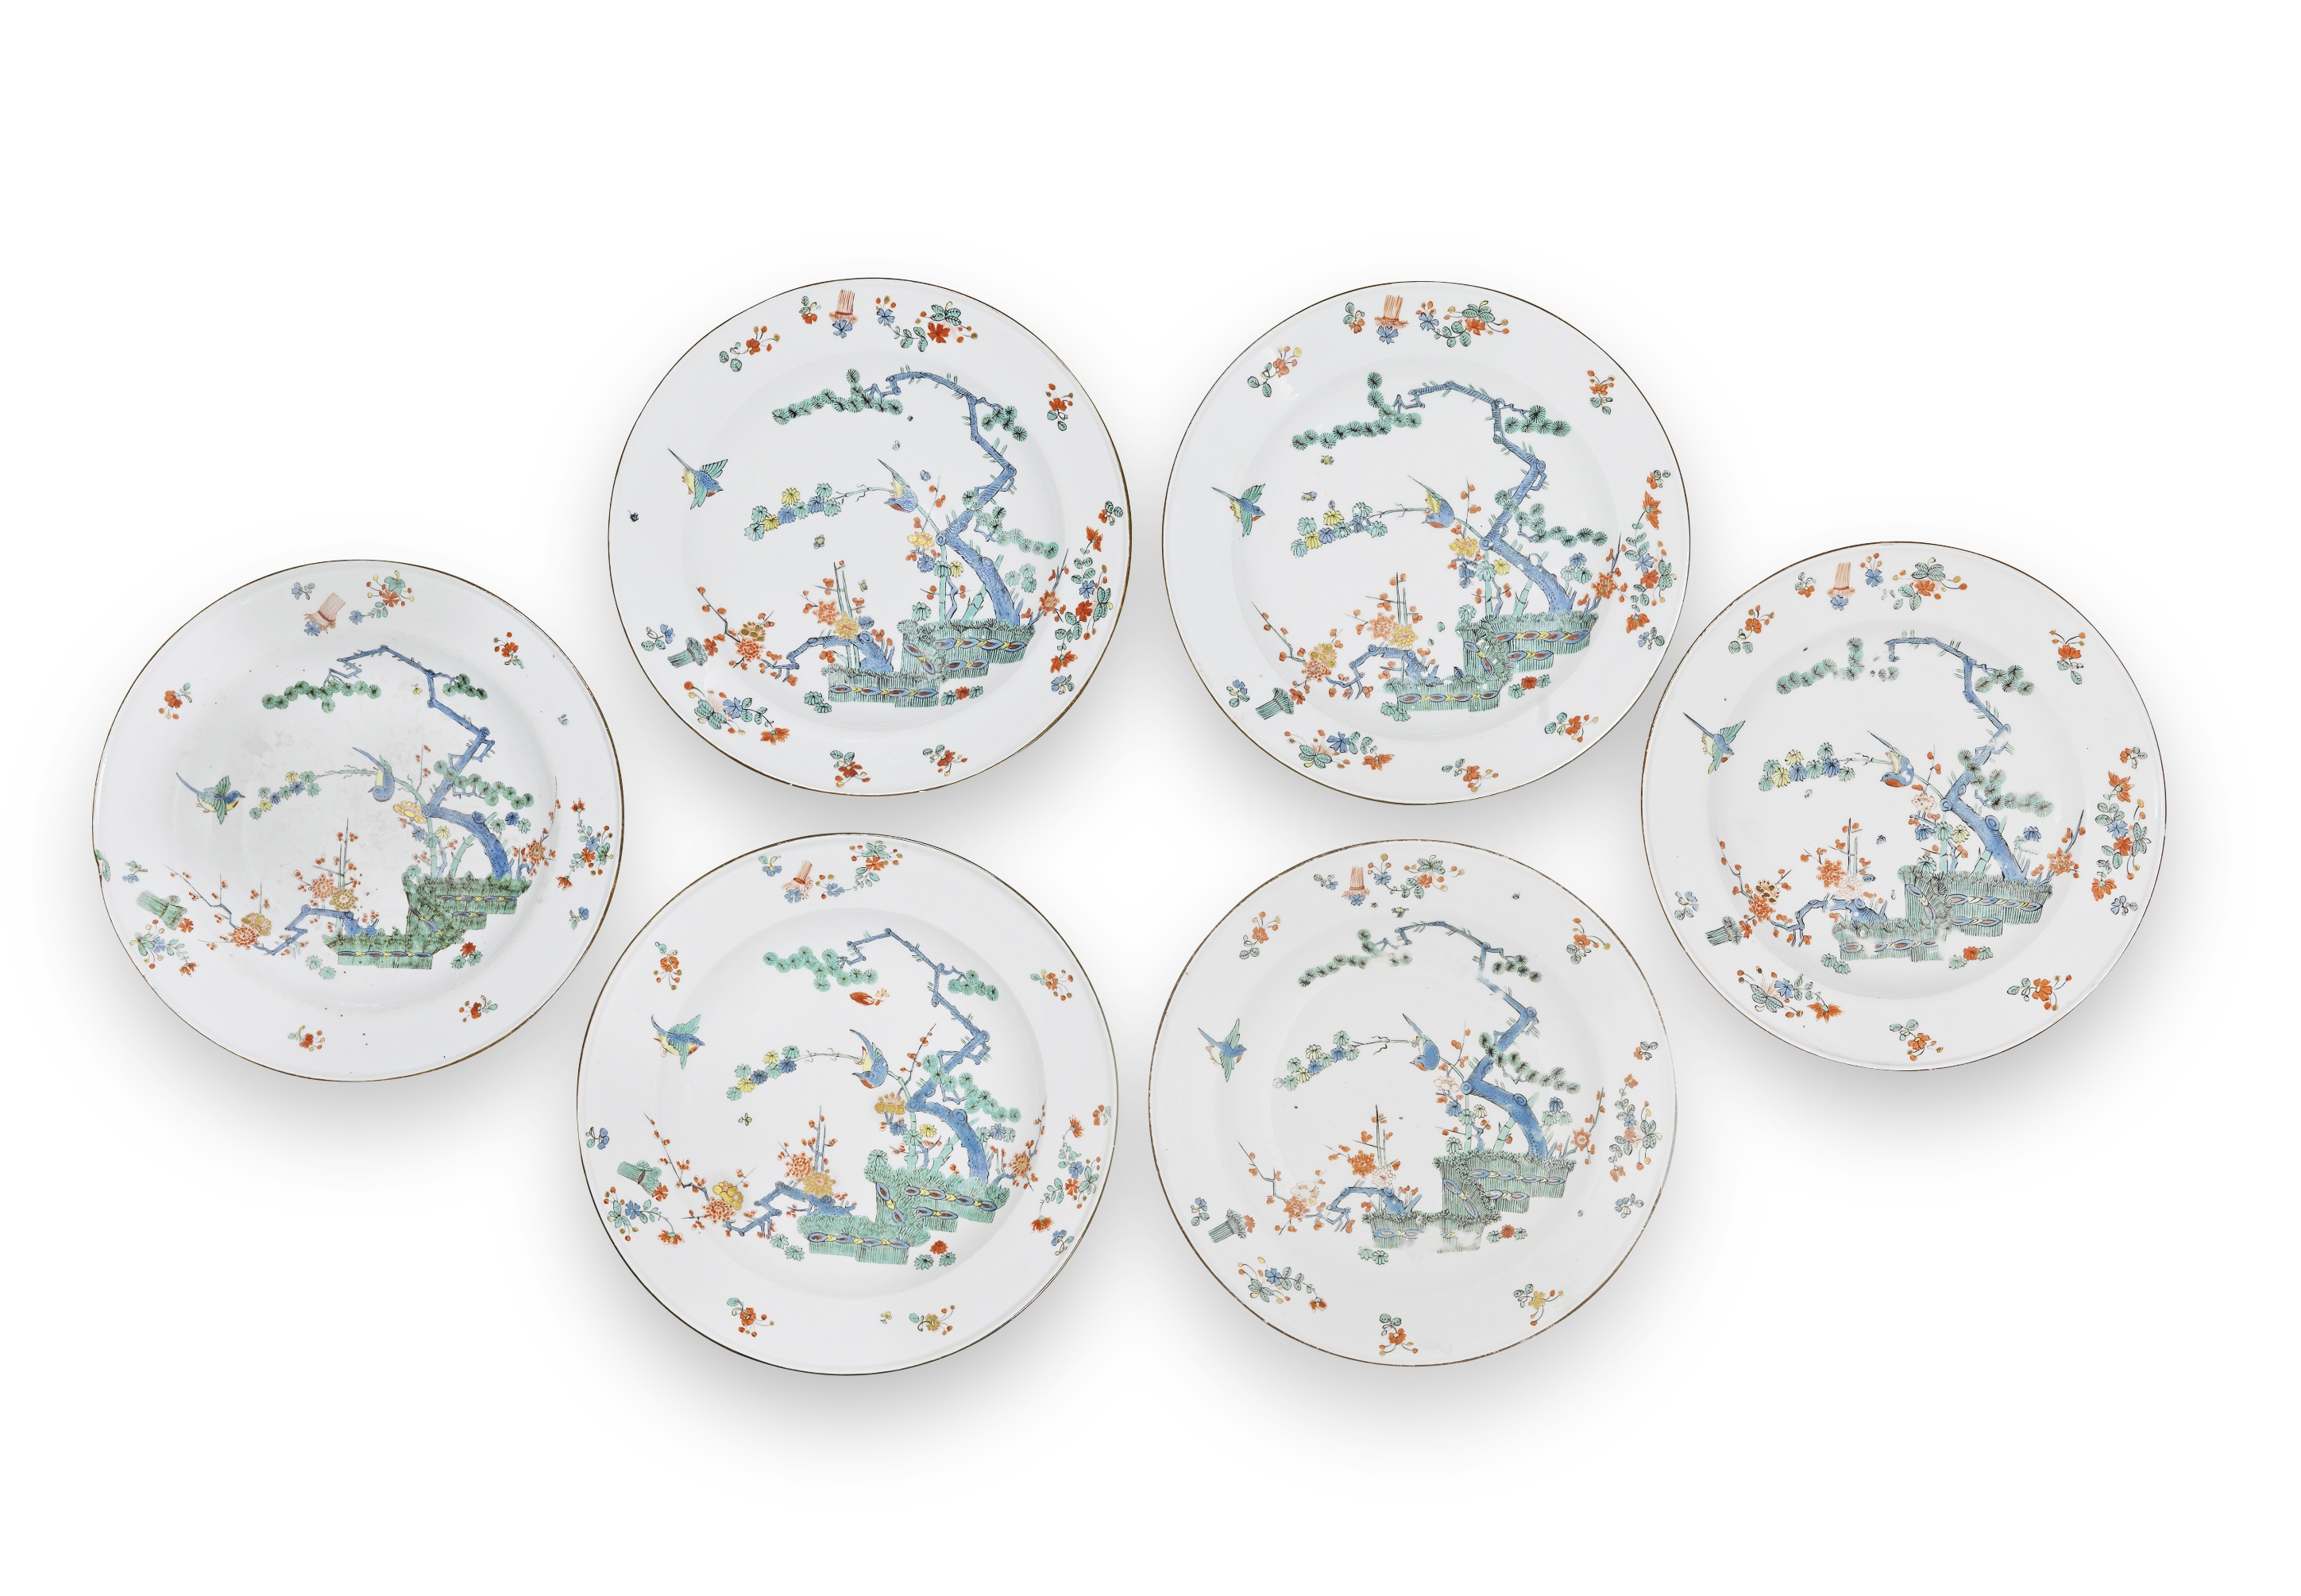 Six Meissen plates, circa 1735-55